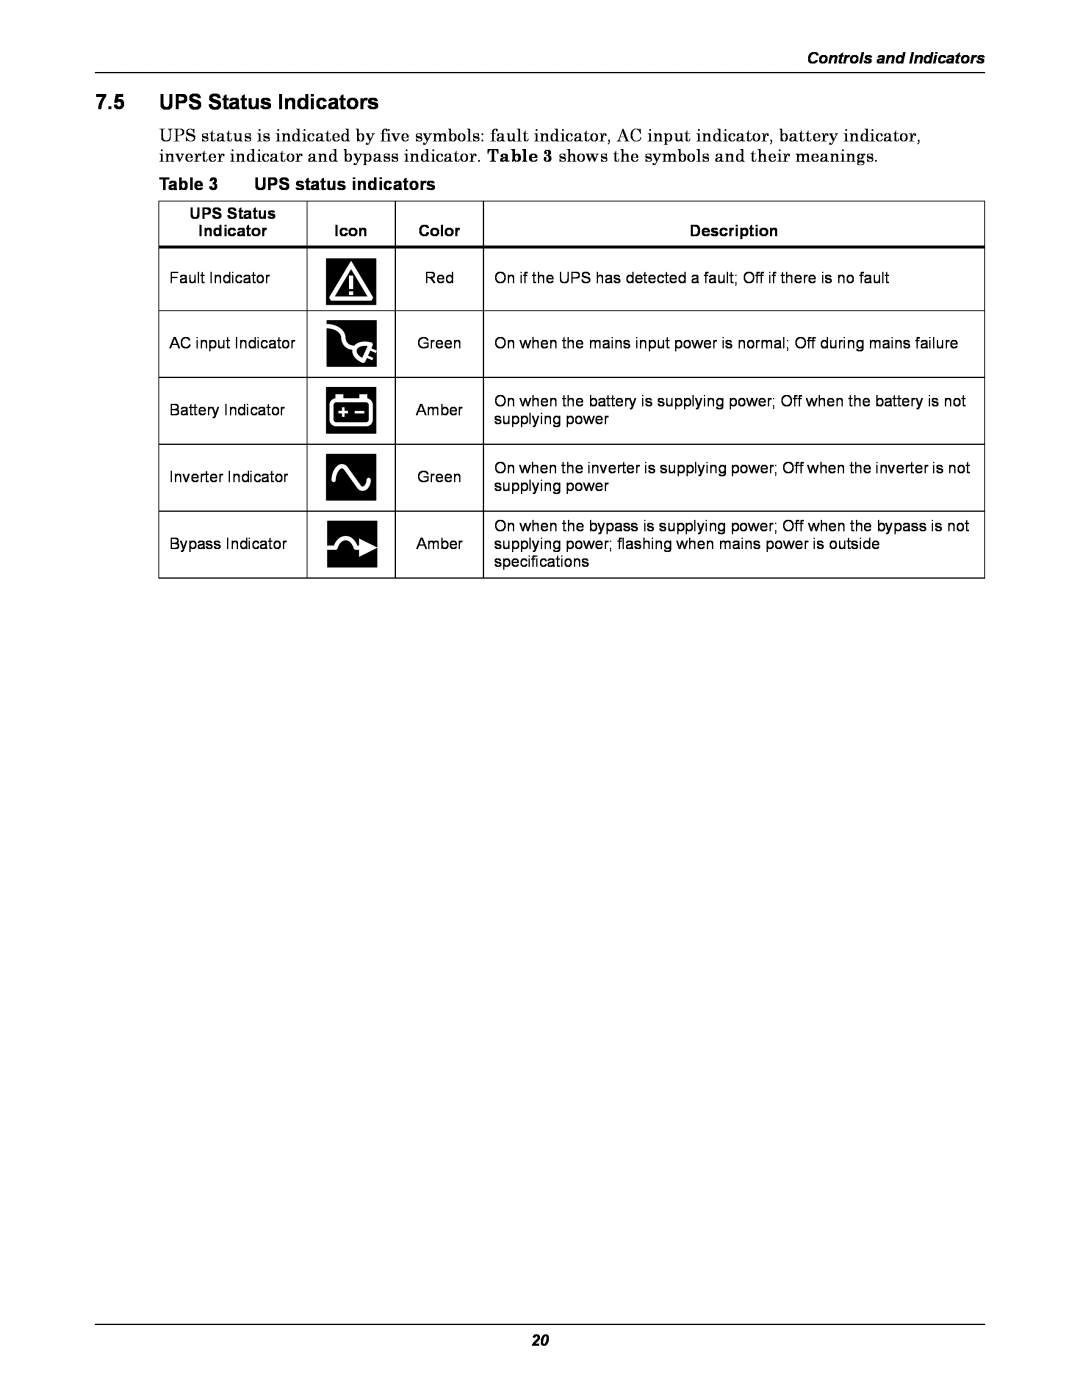 Emerson GXT3 230V user manual 7.5UPS Status Indicators, UPS status indicators, Controls and Indicators 